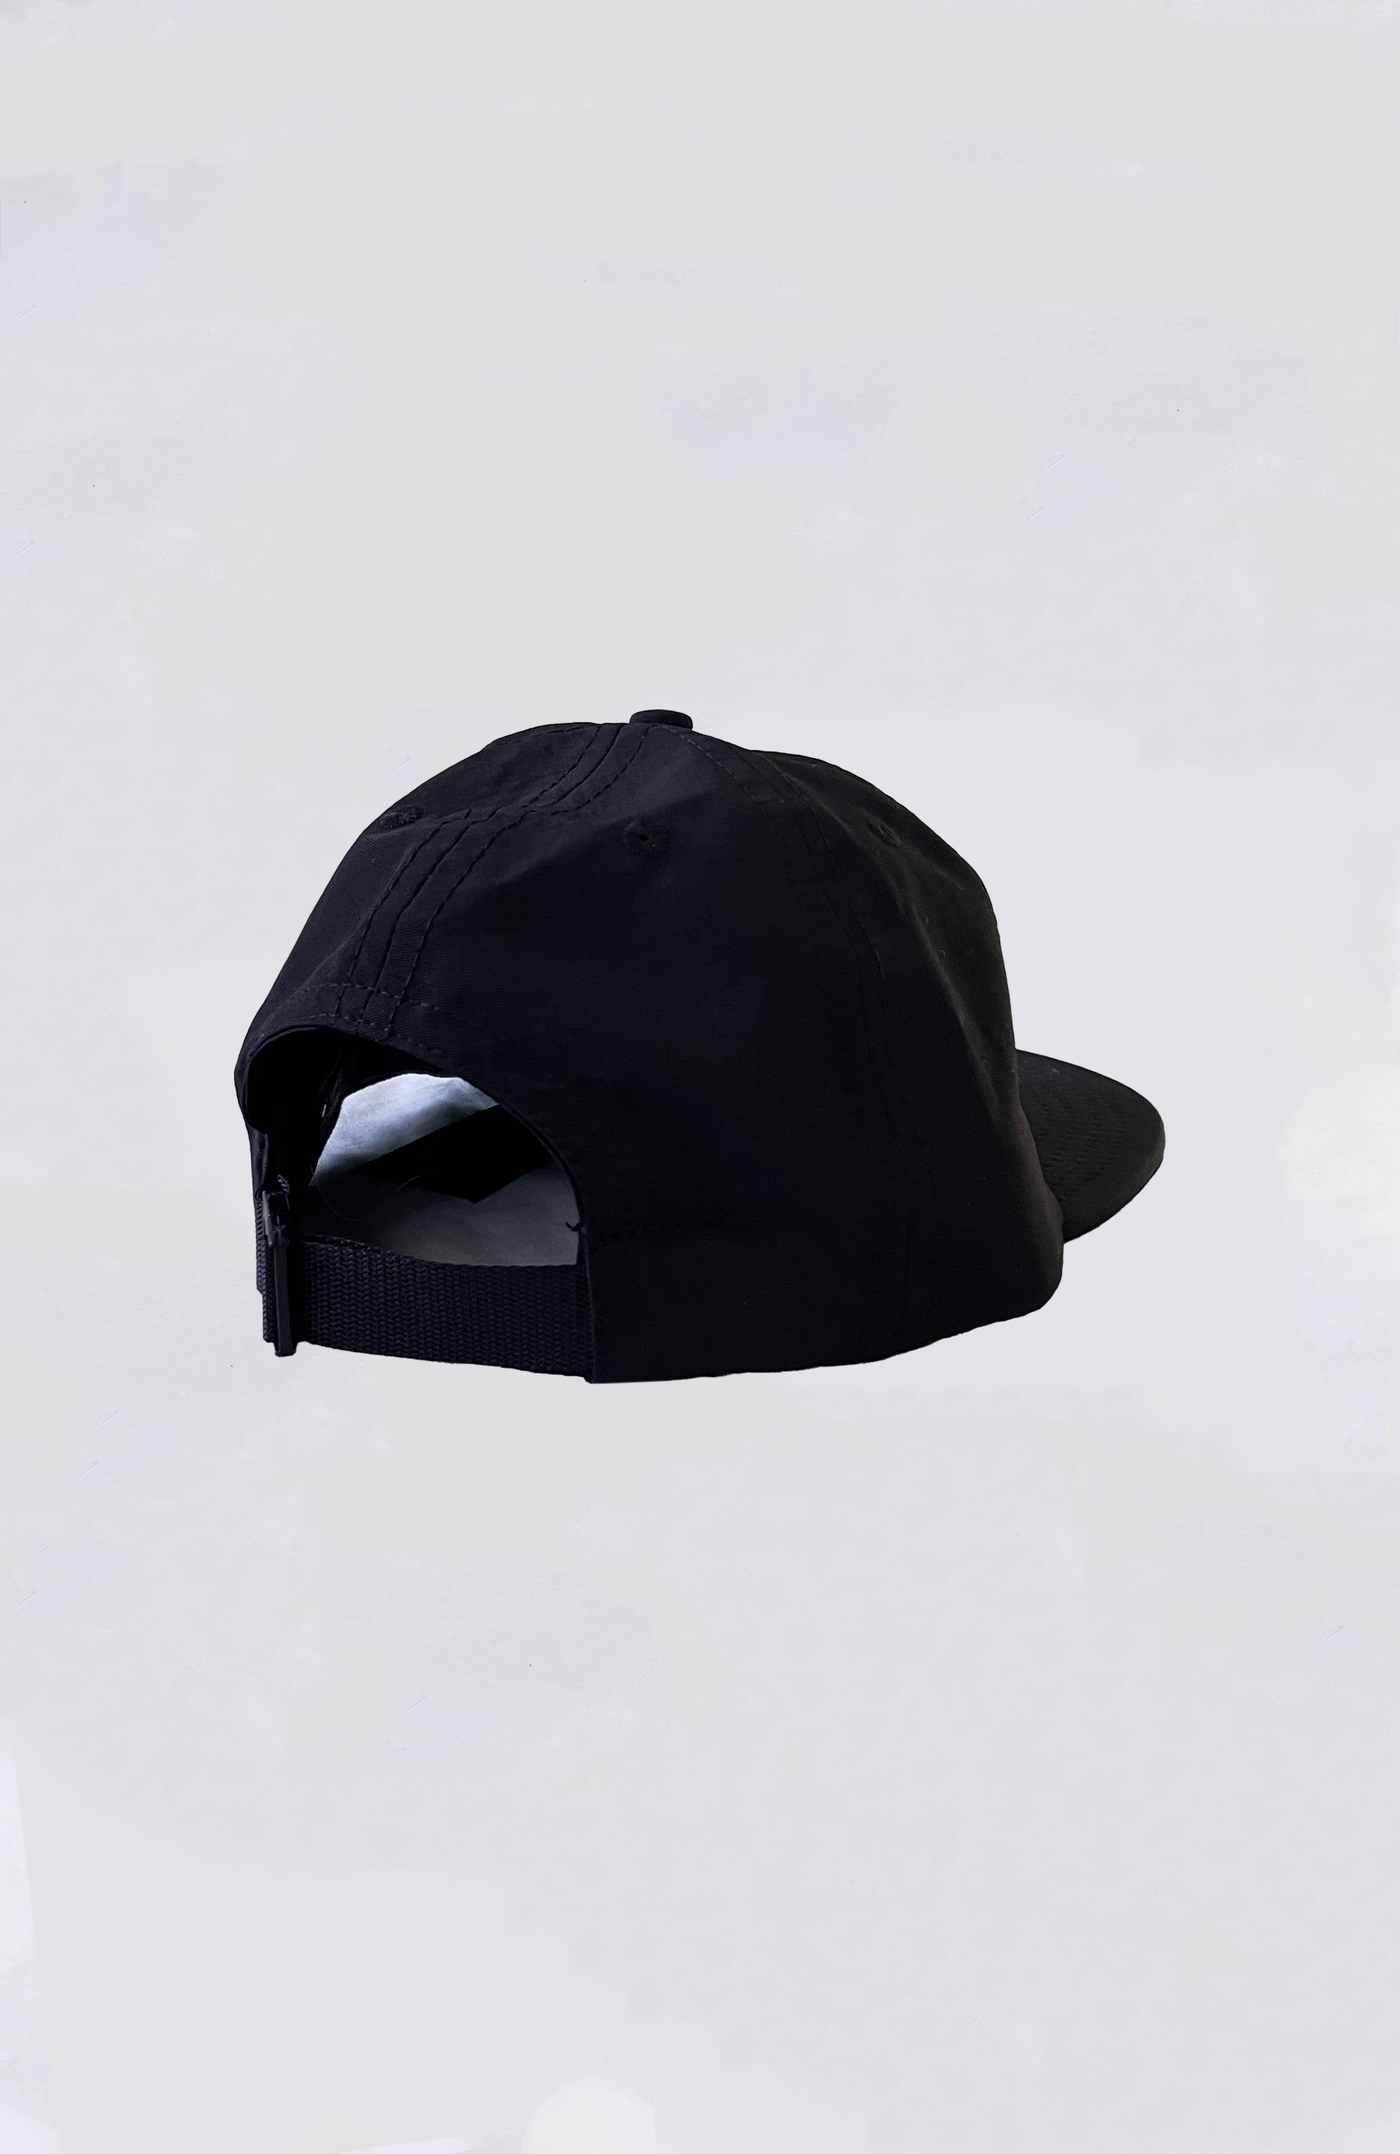 Moon Collective - Moon Logo Strapback Hat